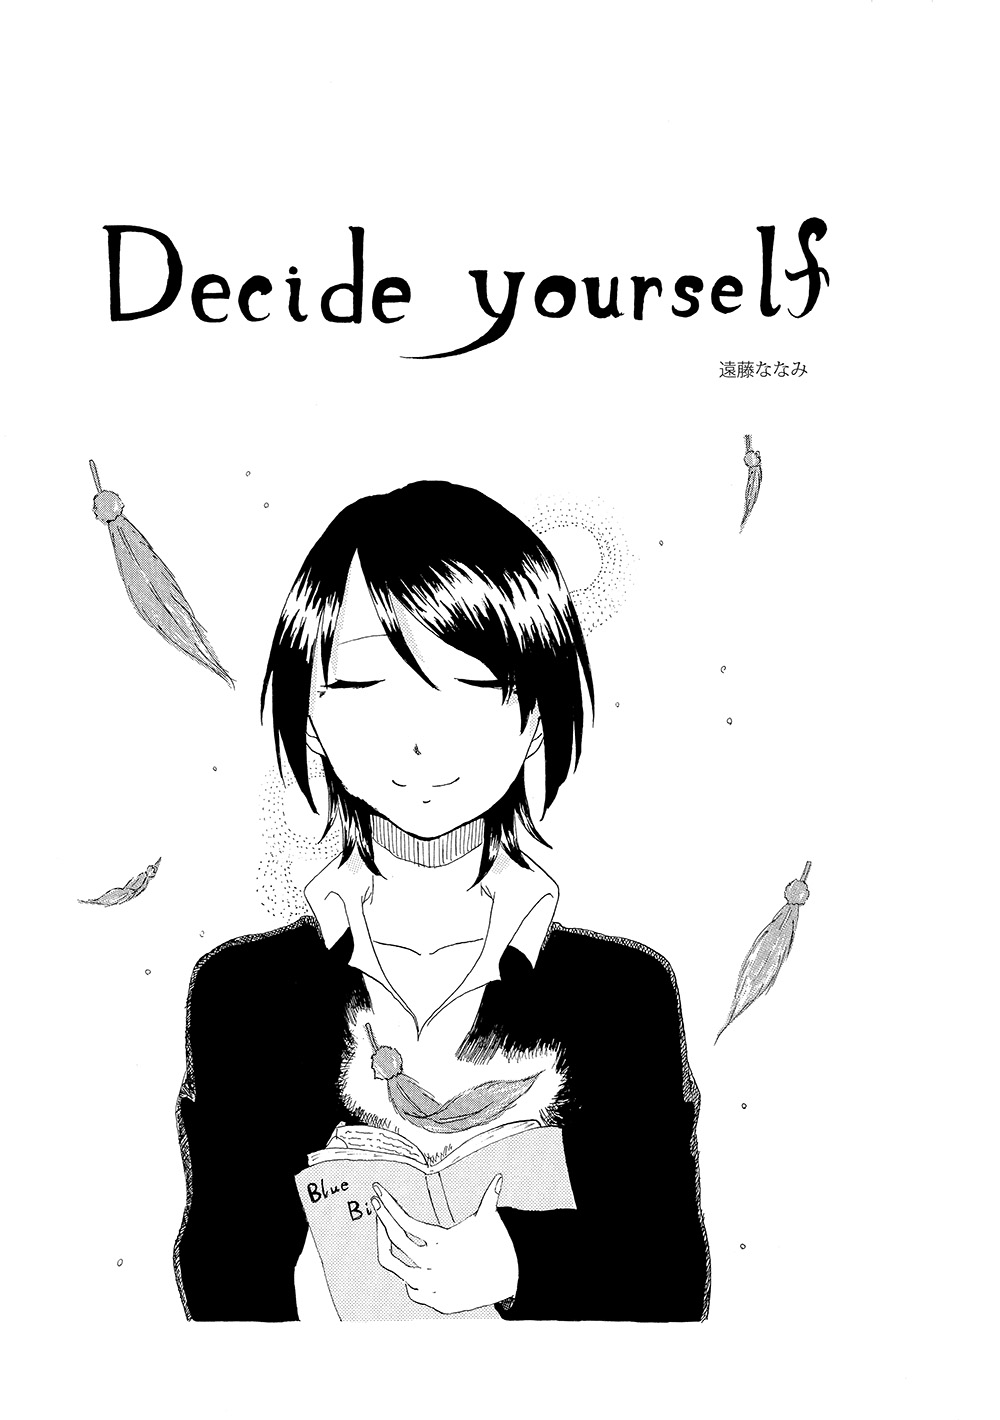 Decide yourself